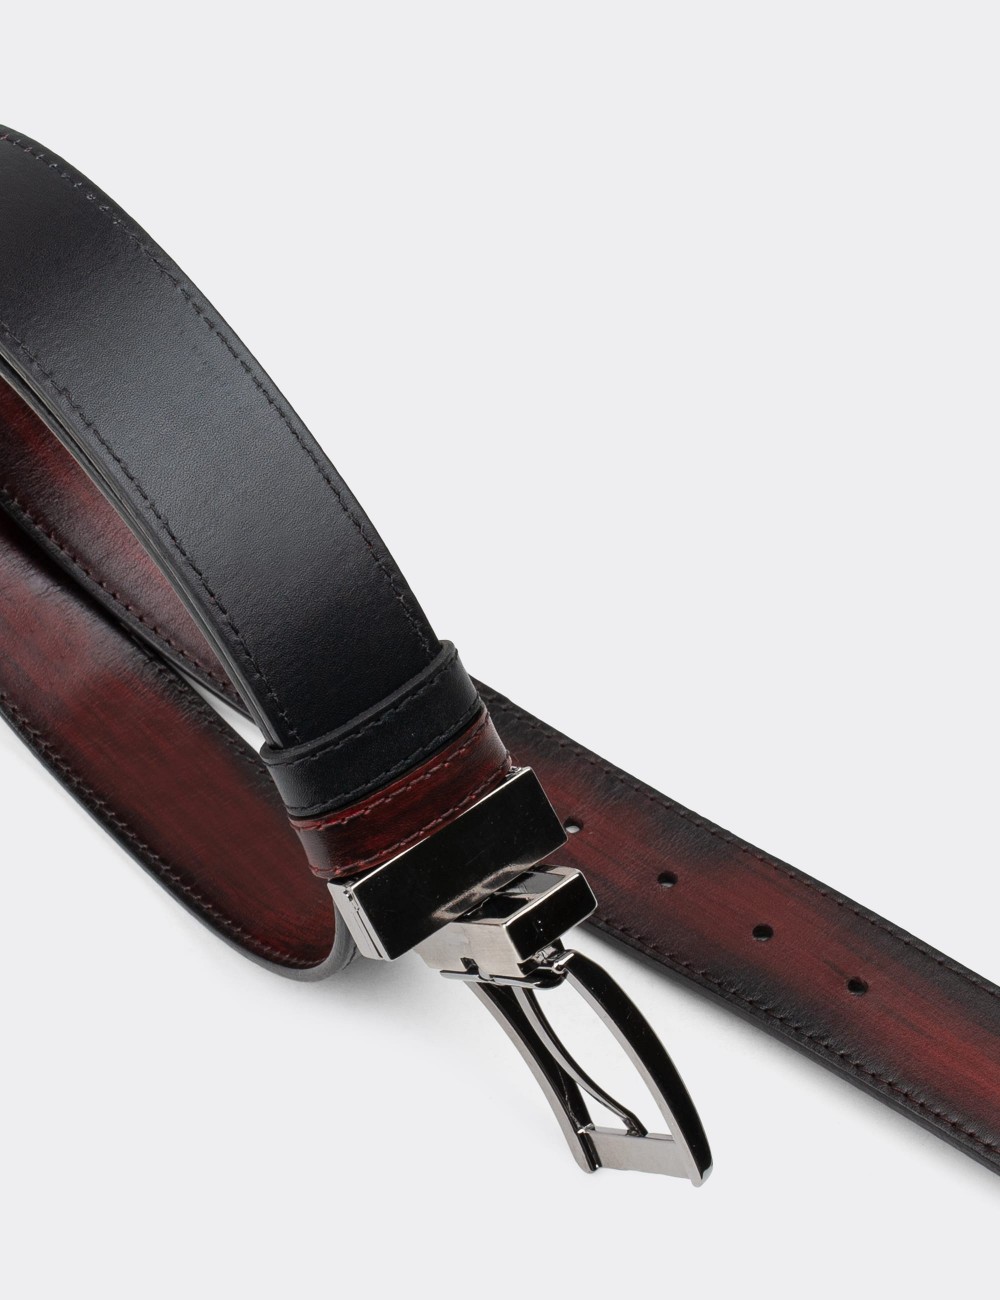  Leather Burgundy and Black Double Sided Men's Belt - K0409MBRDW01